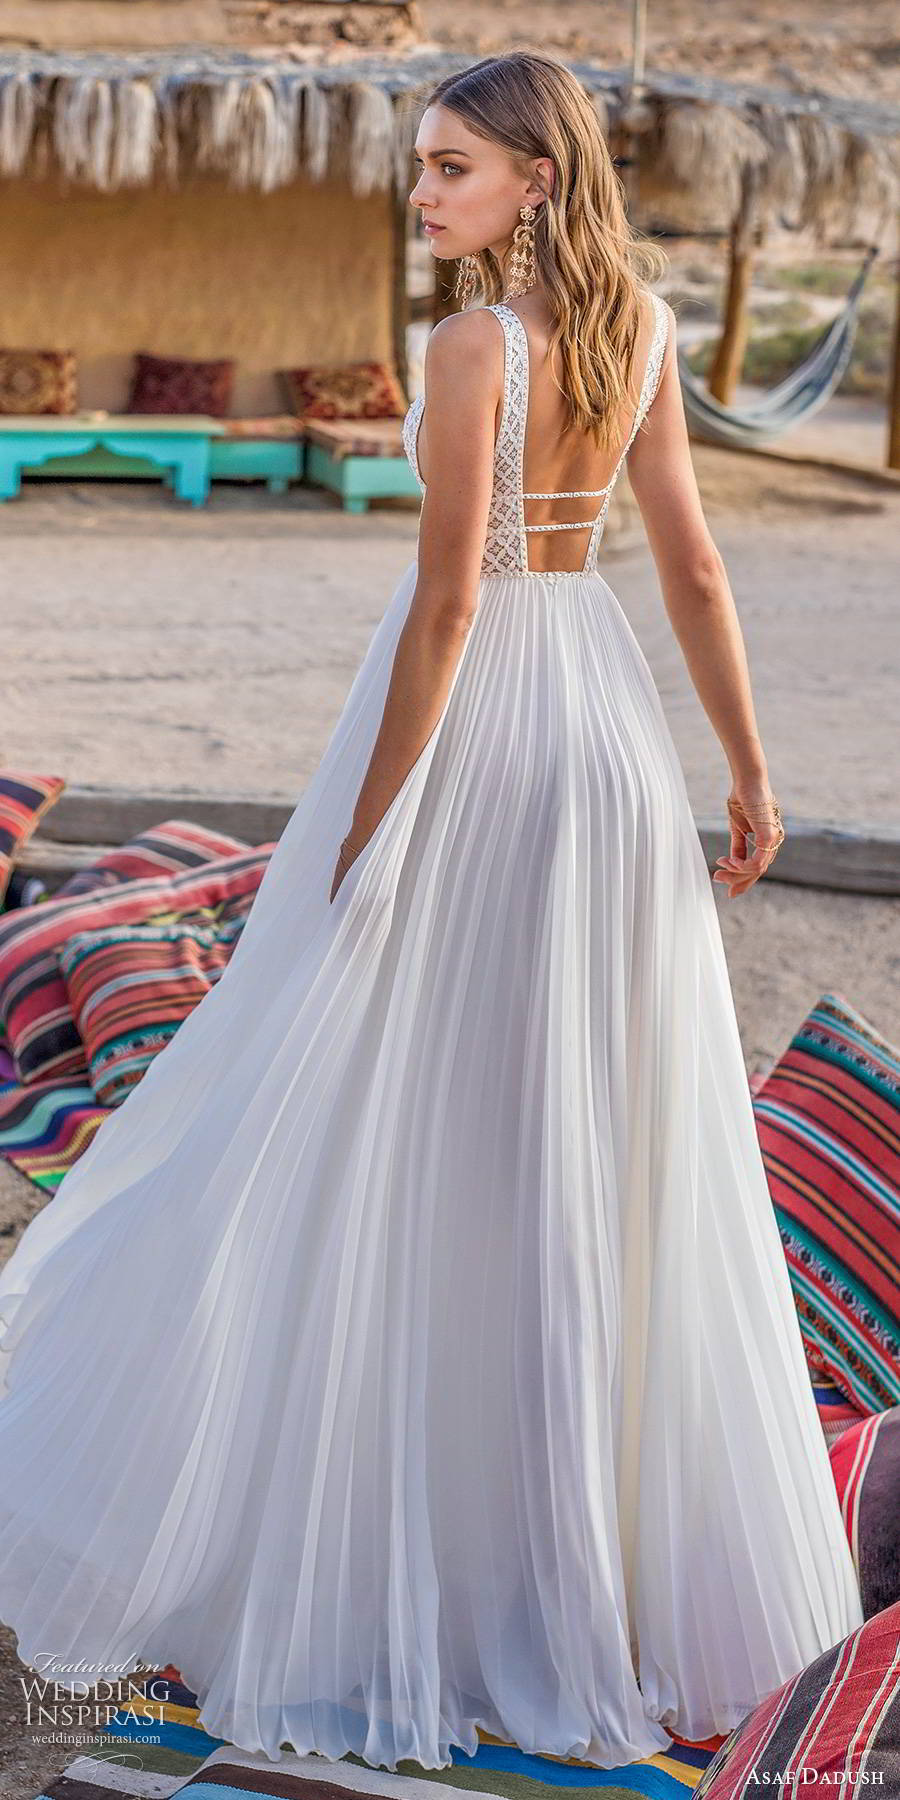 asaf dadush 2019 bridal sleeveless thick straps plunging v neckline embellished bodice pleated skirt soft a line wedding dress low back (4) bv